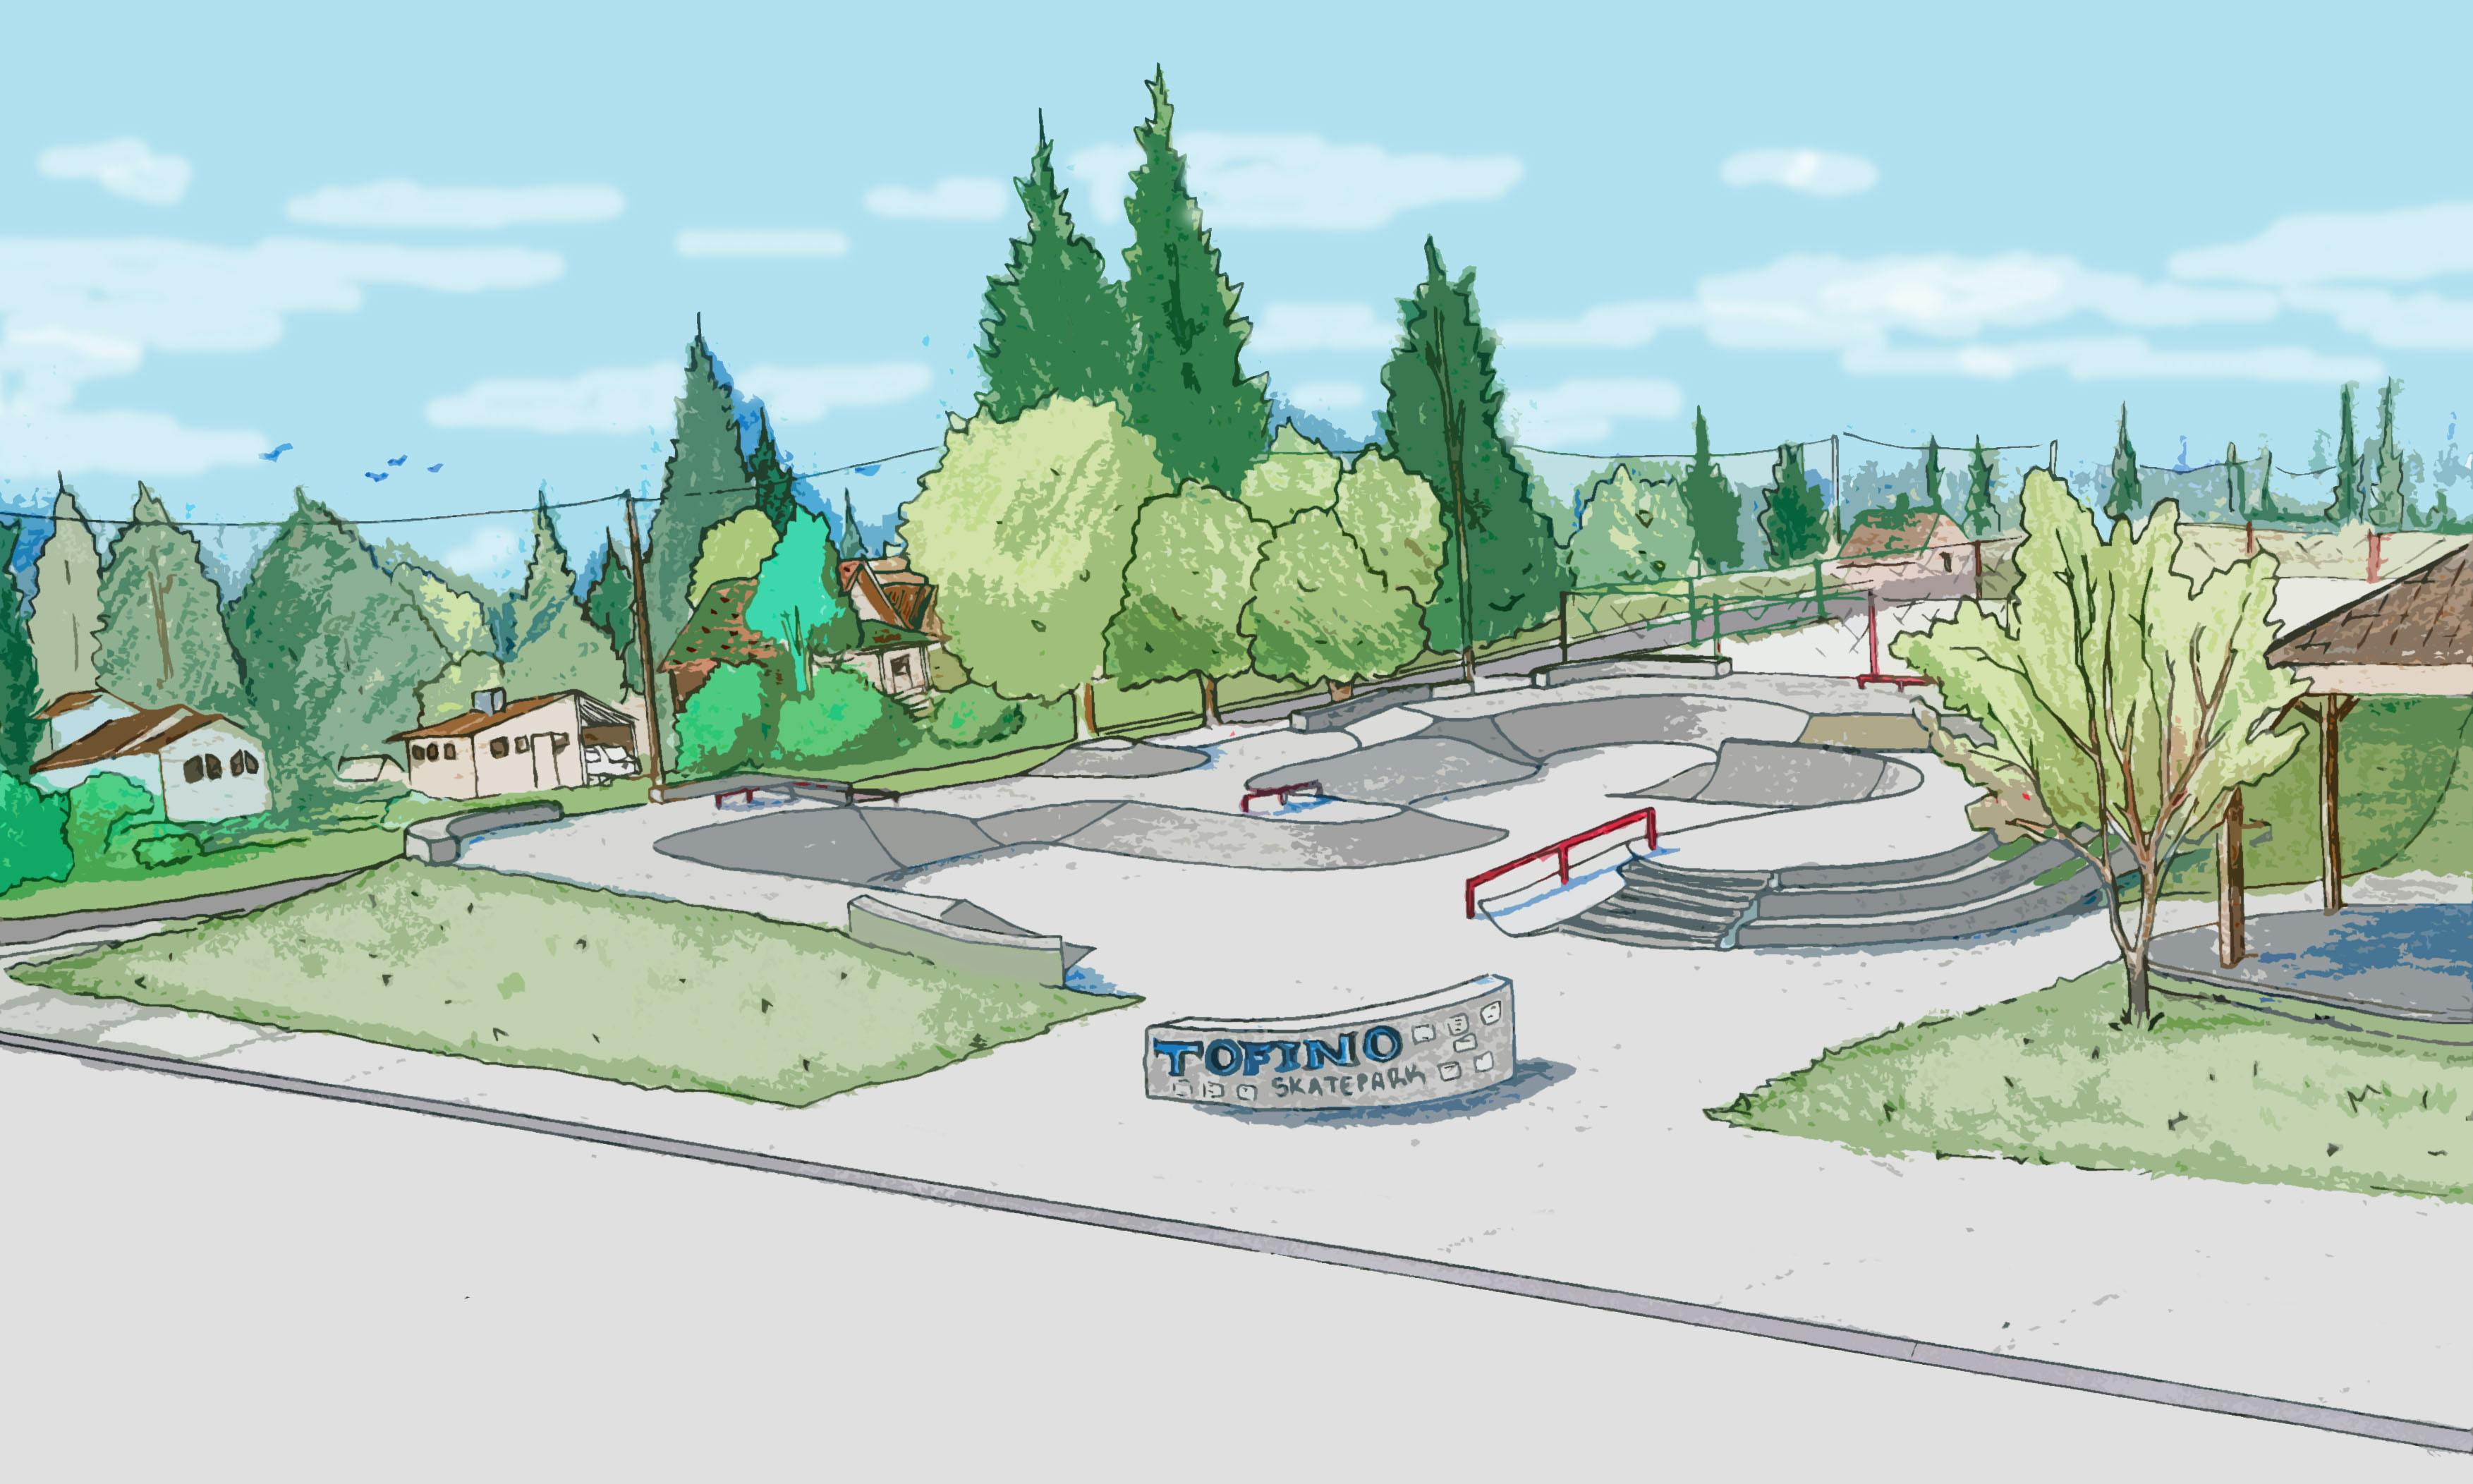 Sketch from original skatepark development